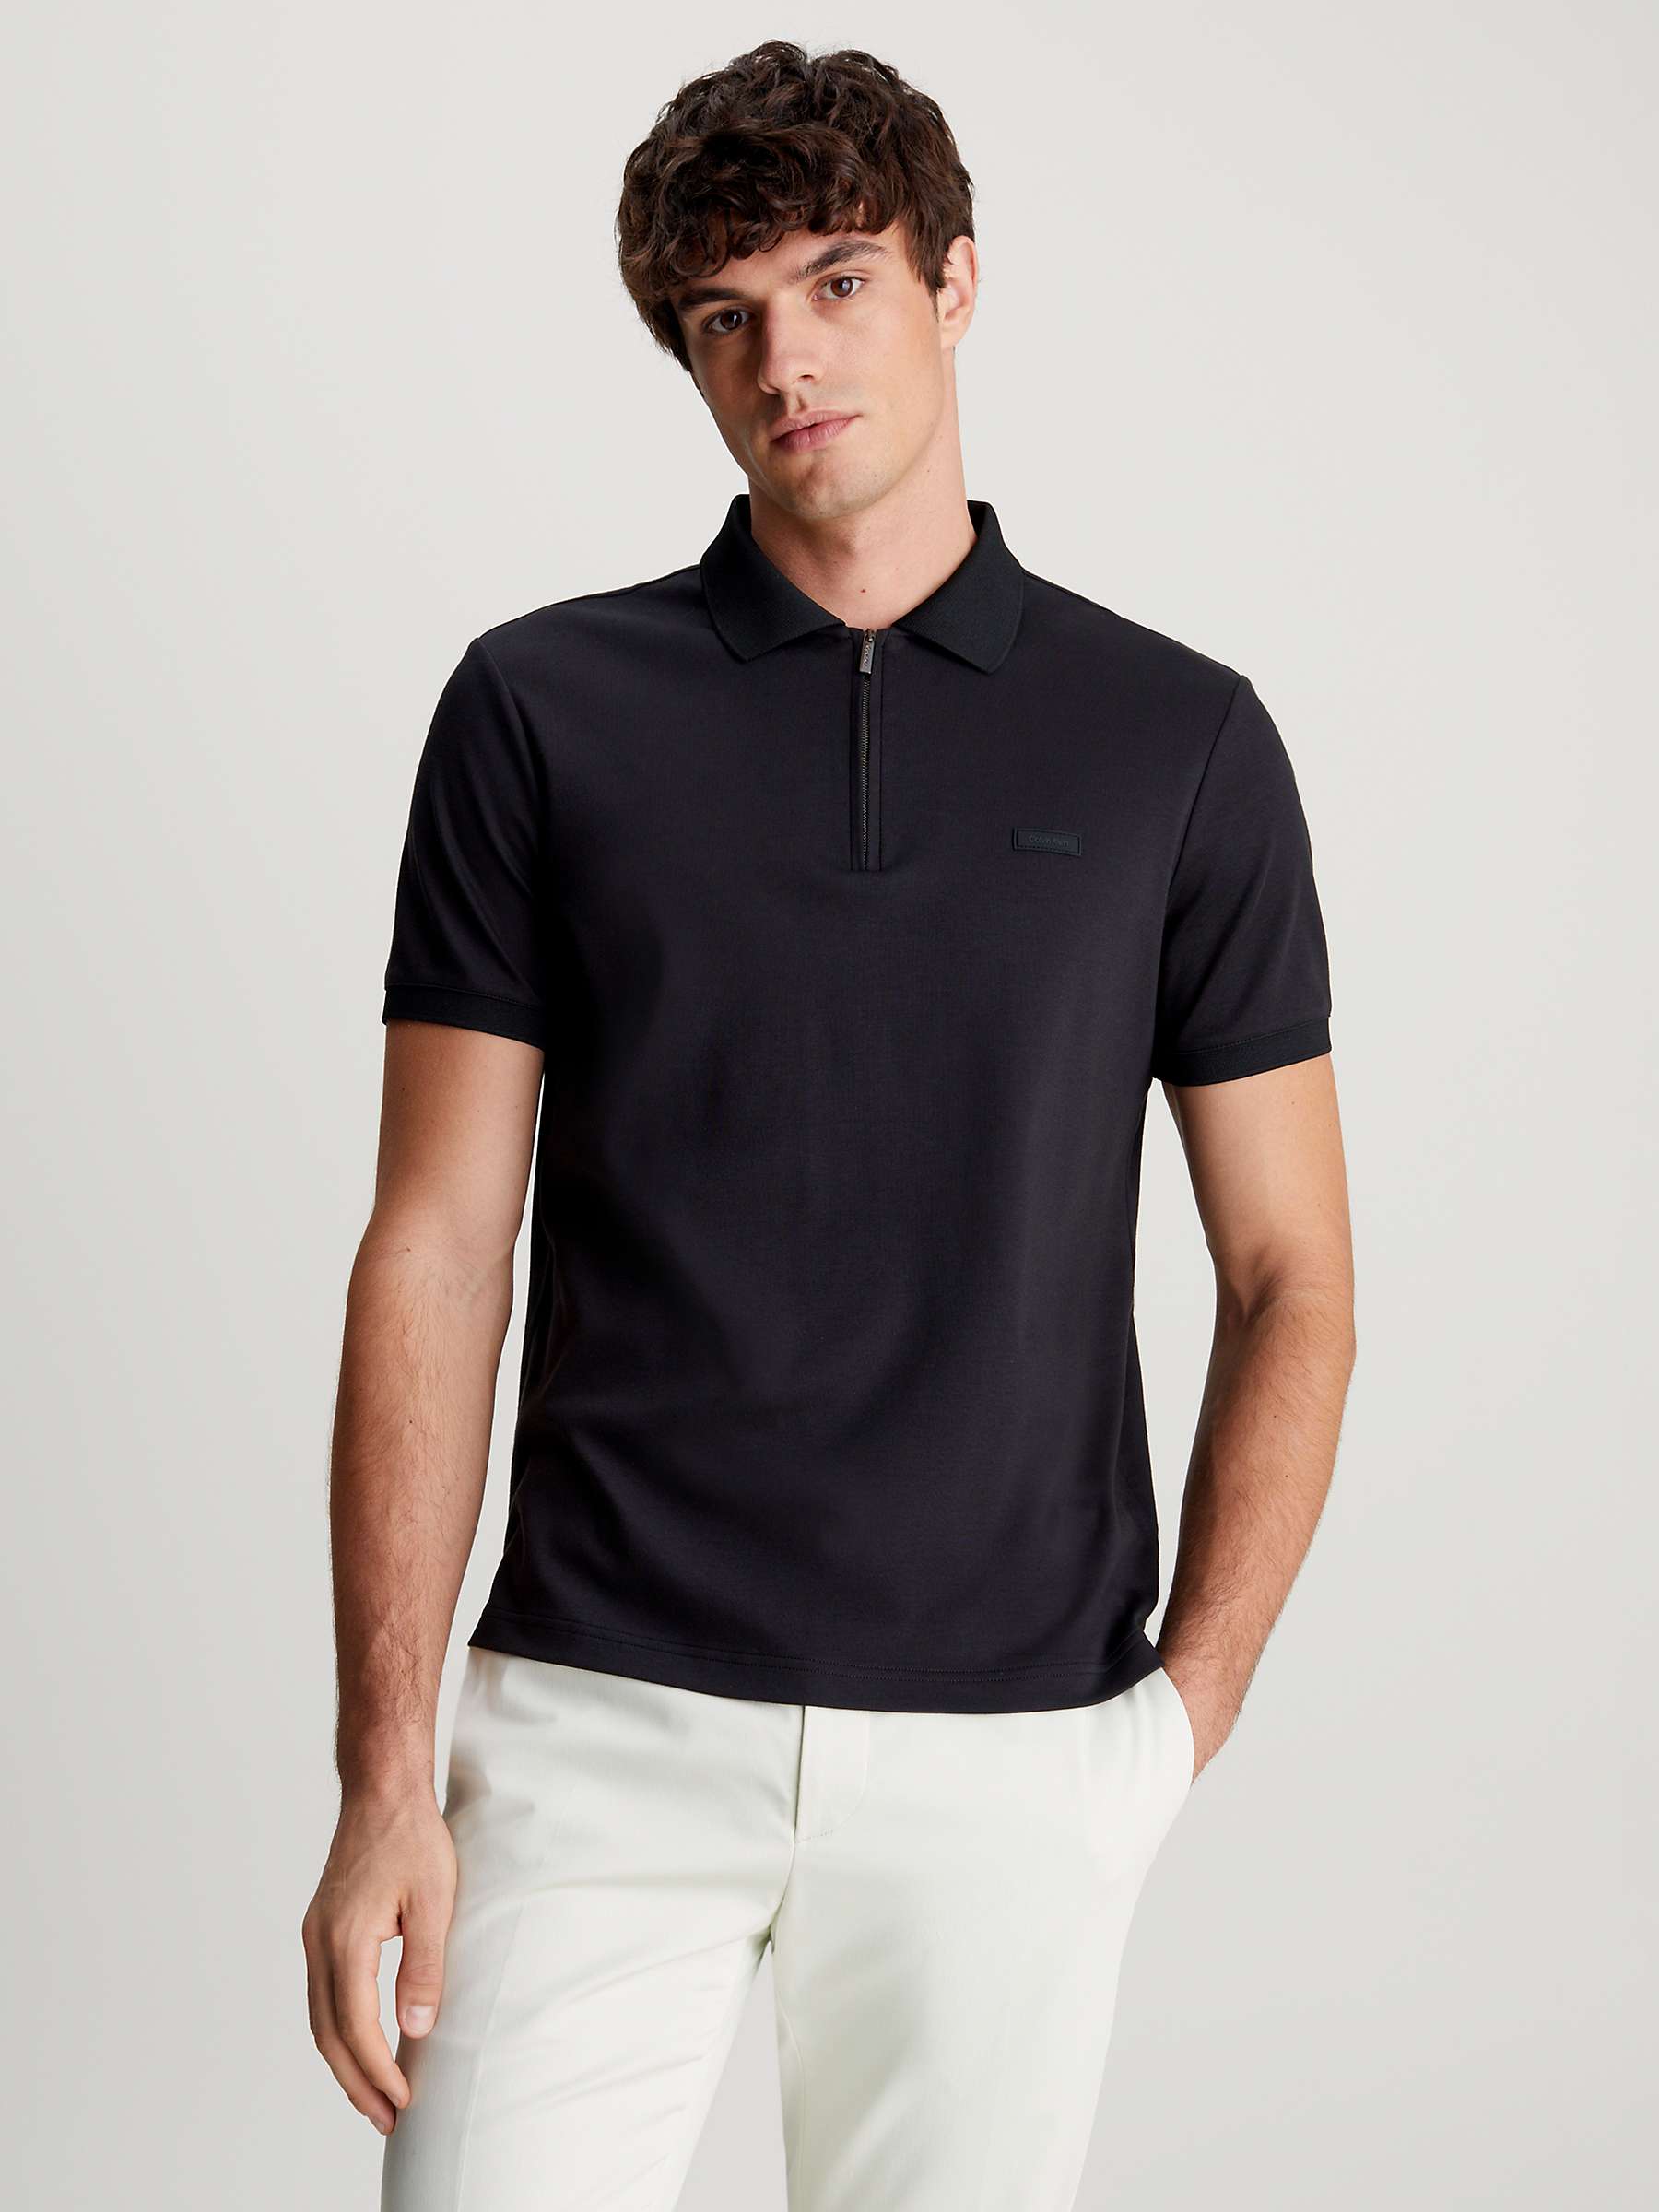 Buy Calvin Klein Zip Neck Organic Cotton Polo Shirt, Ck Black Online at johnlewis.com